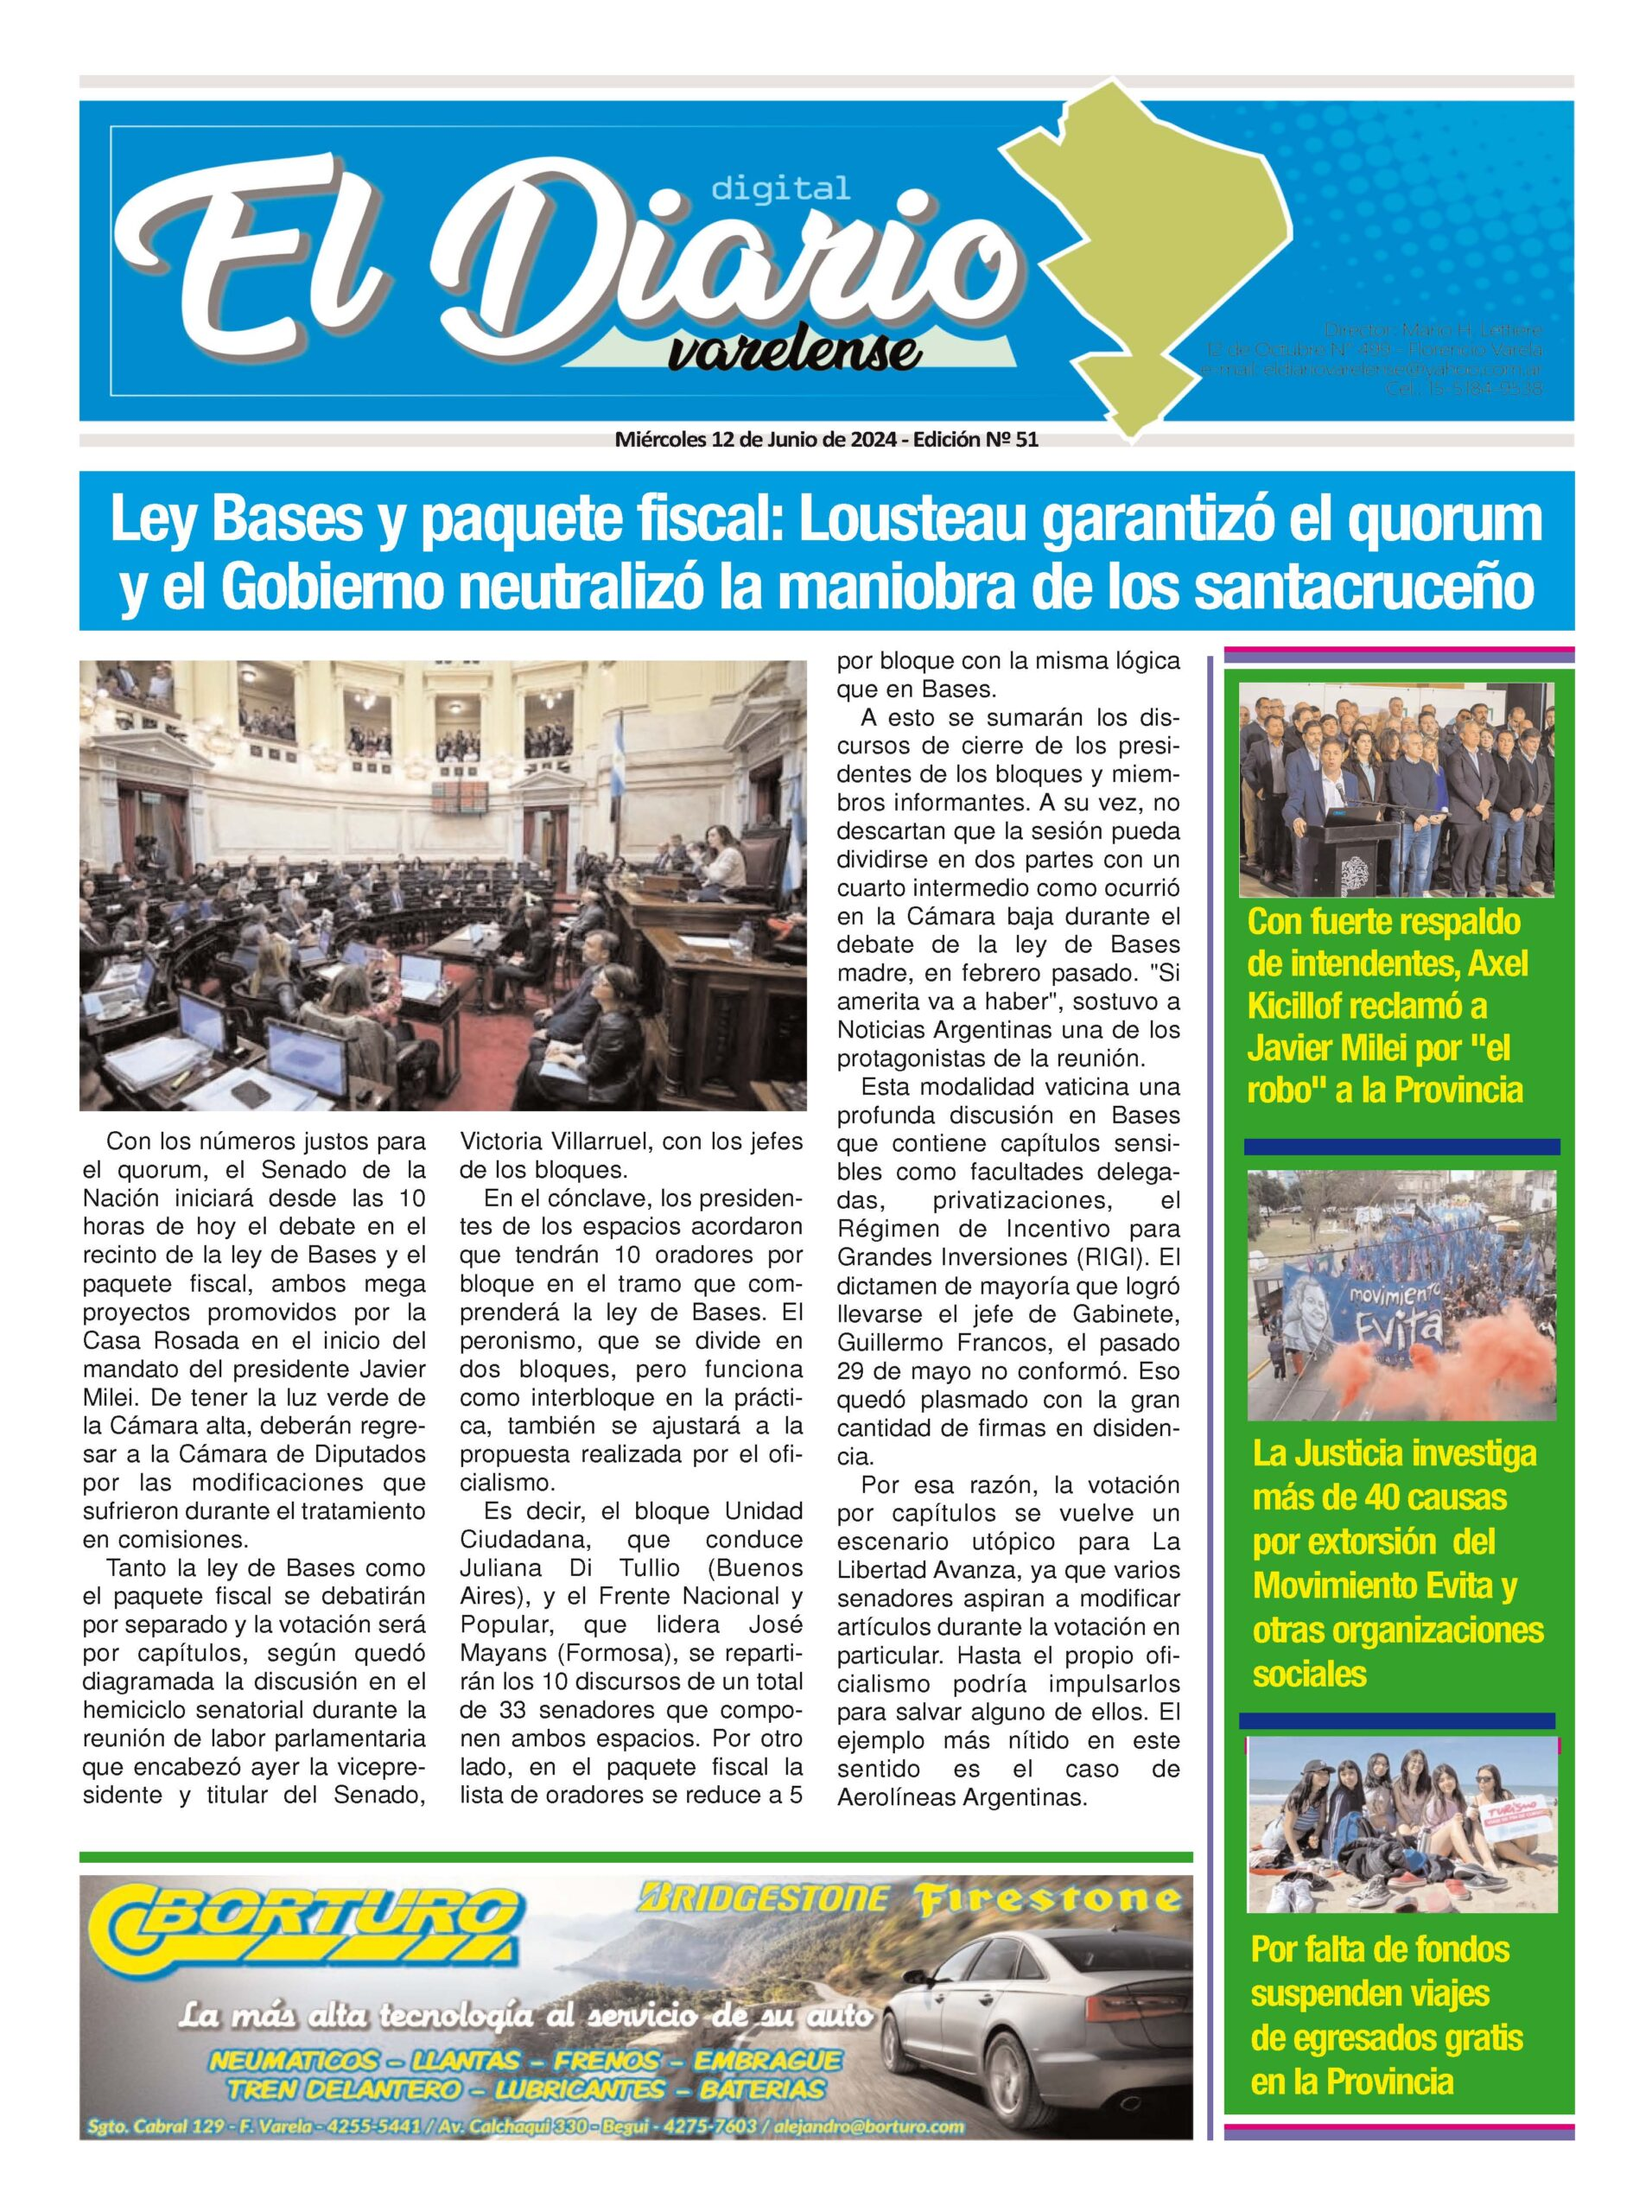 noticiaspuertosantacruz.com.ar - Imagen extraida de: https://flipr.com.ar/clipping/portadas-de-diarios/explorar/tapa-de-diarios-miercoles-12-de-junio-de-2024/